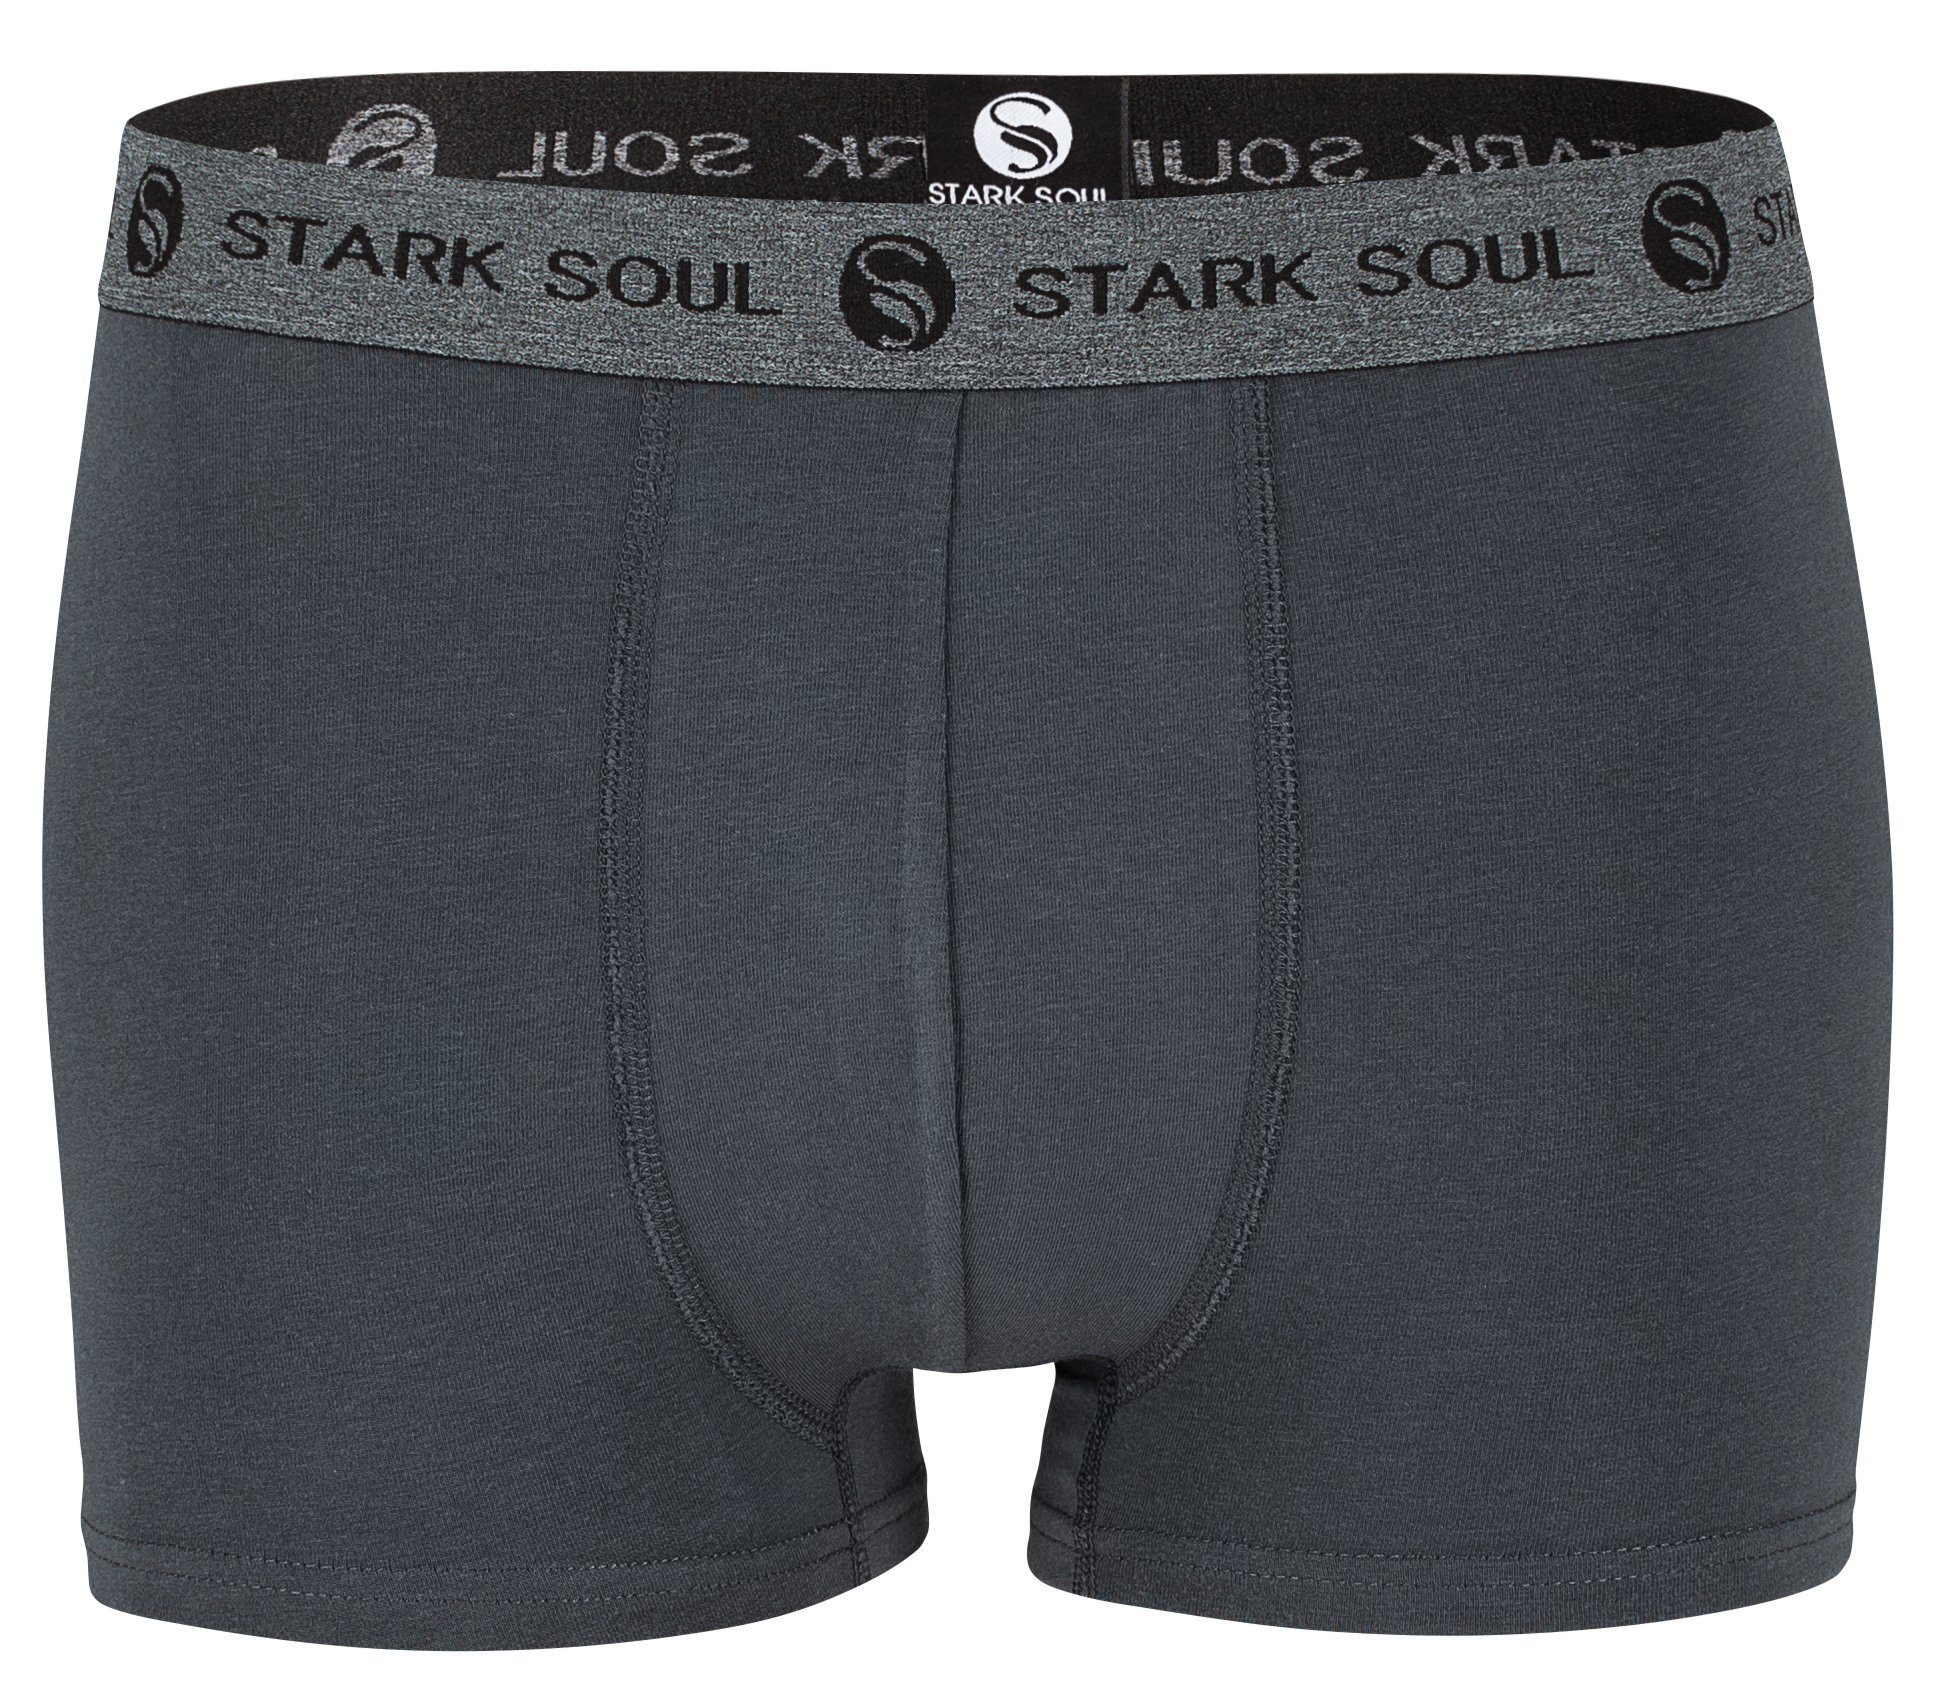 Herren Stark Boxershorts 6er Dunkelgrau Soul® Baumwoll-Unterhosen Boxershorts, 6er-Pack im Pack, Hipster